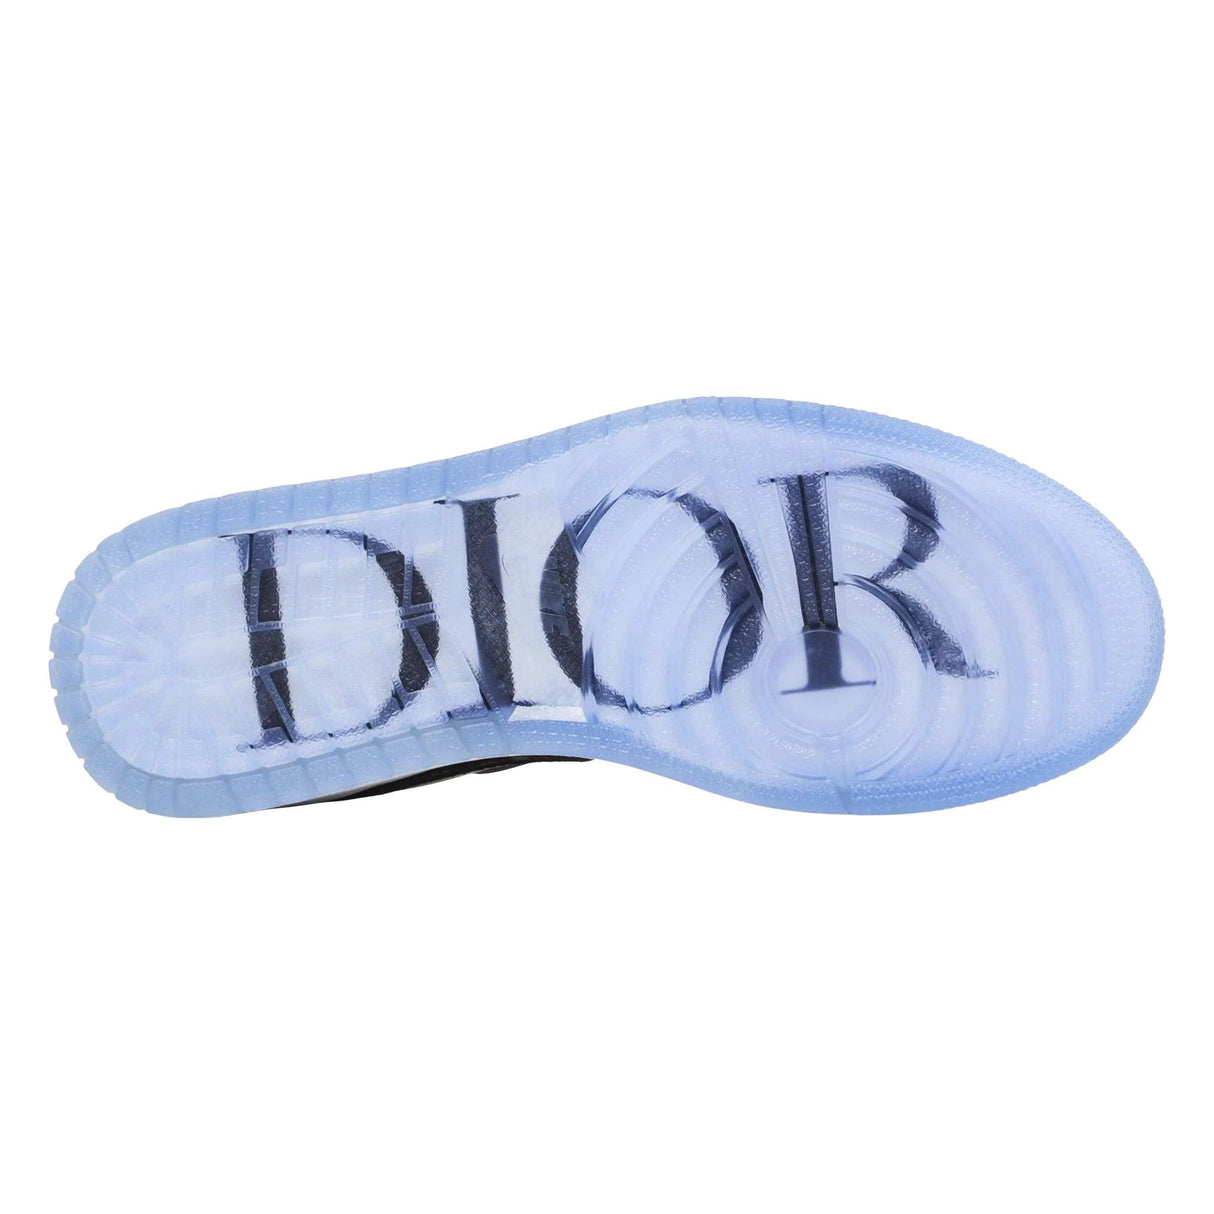 Dior x Air Jordan 1 Low - Dawntown